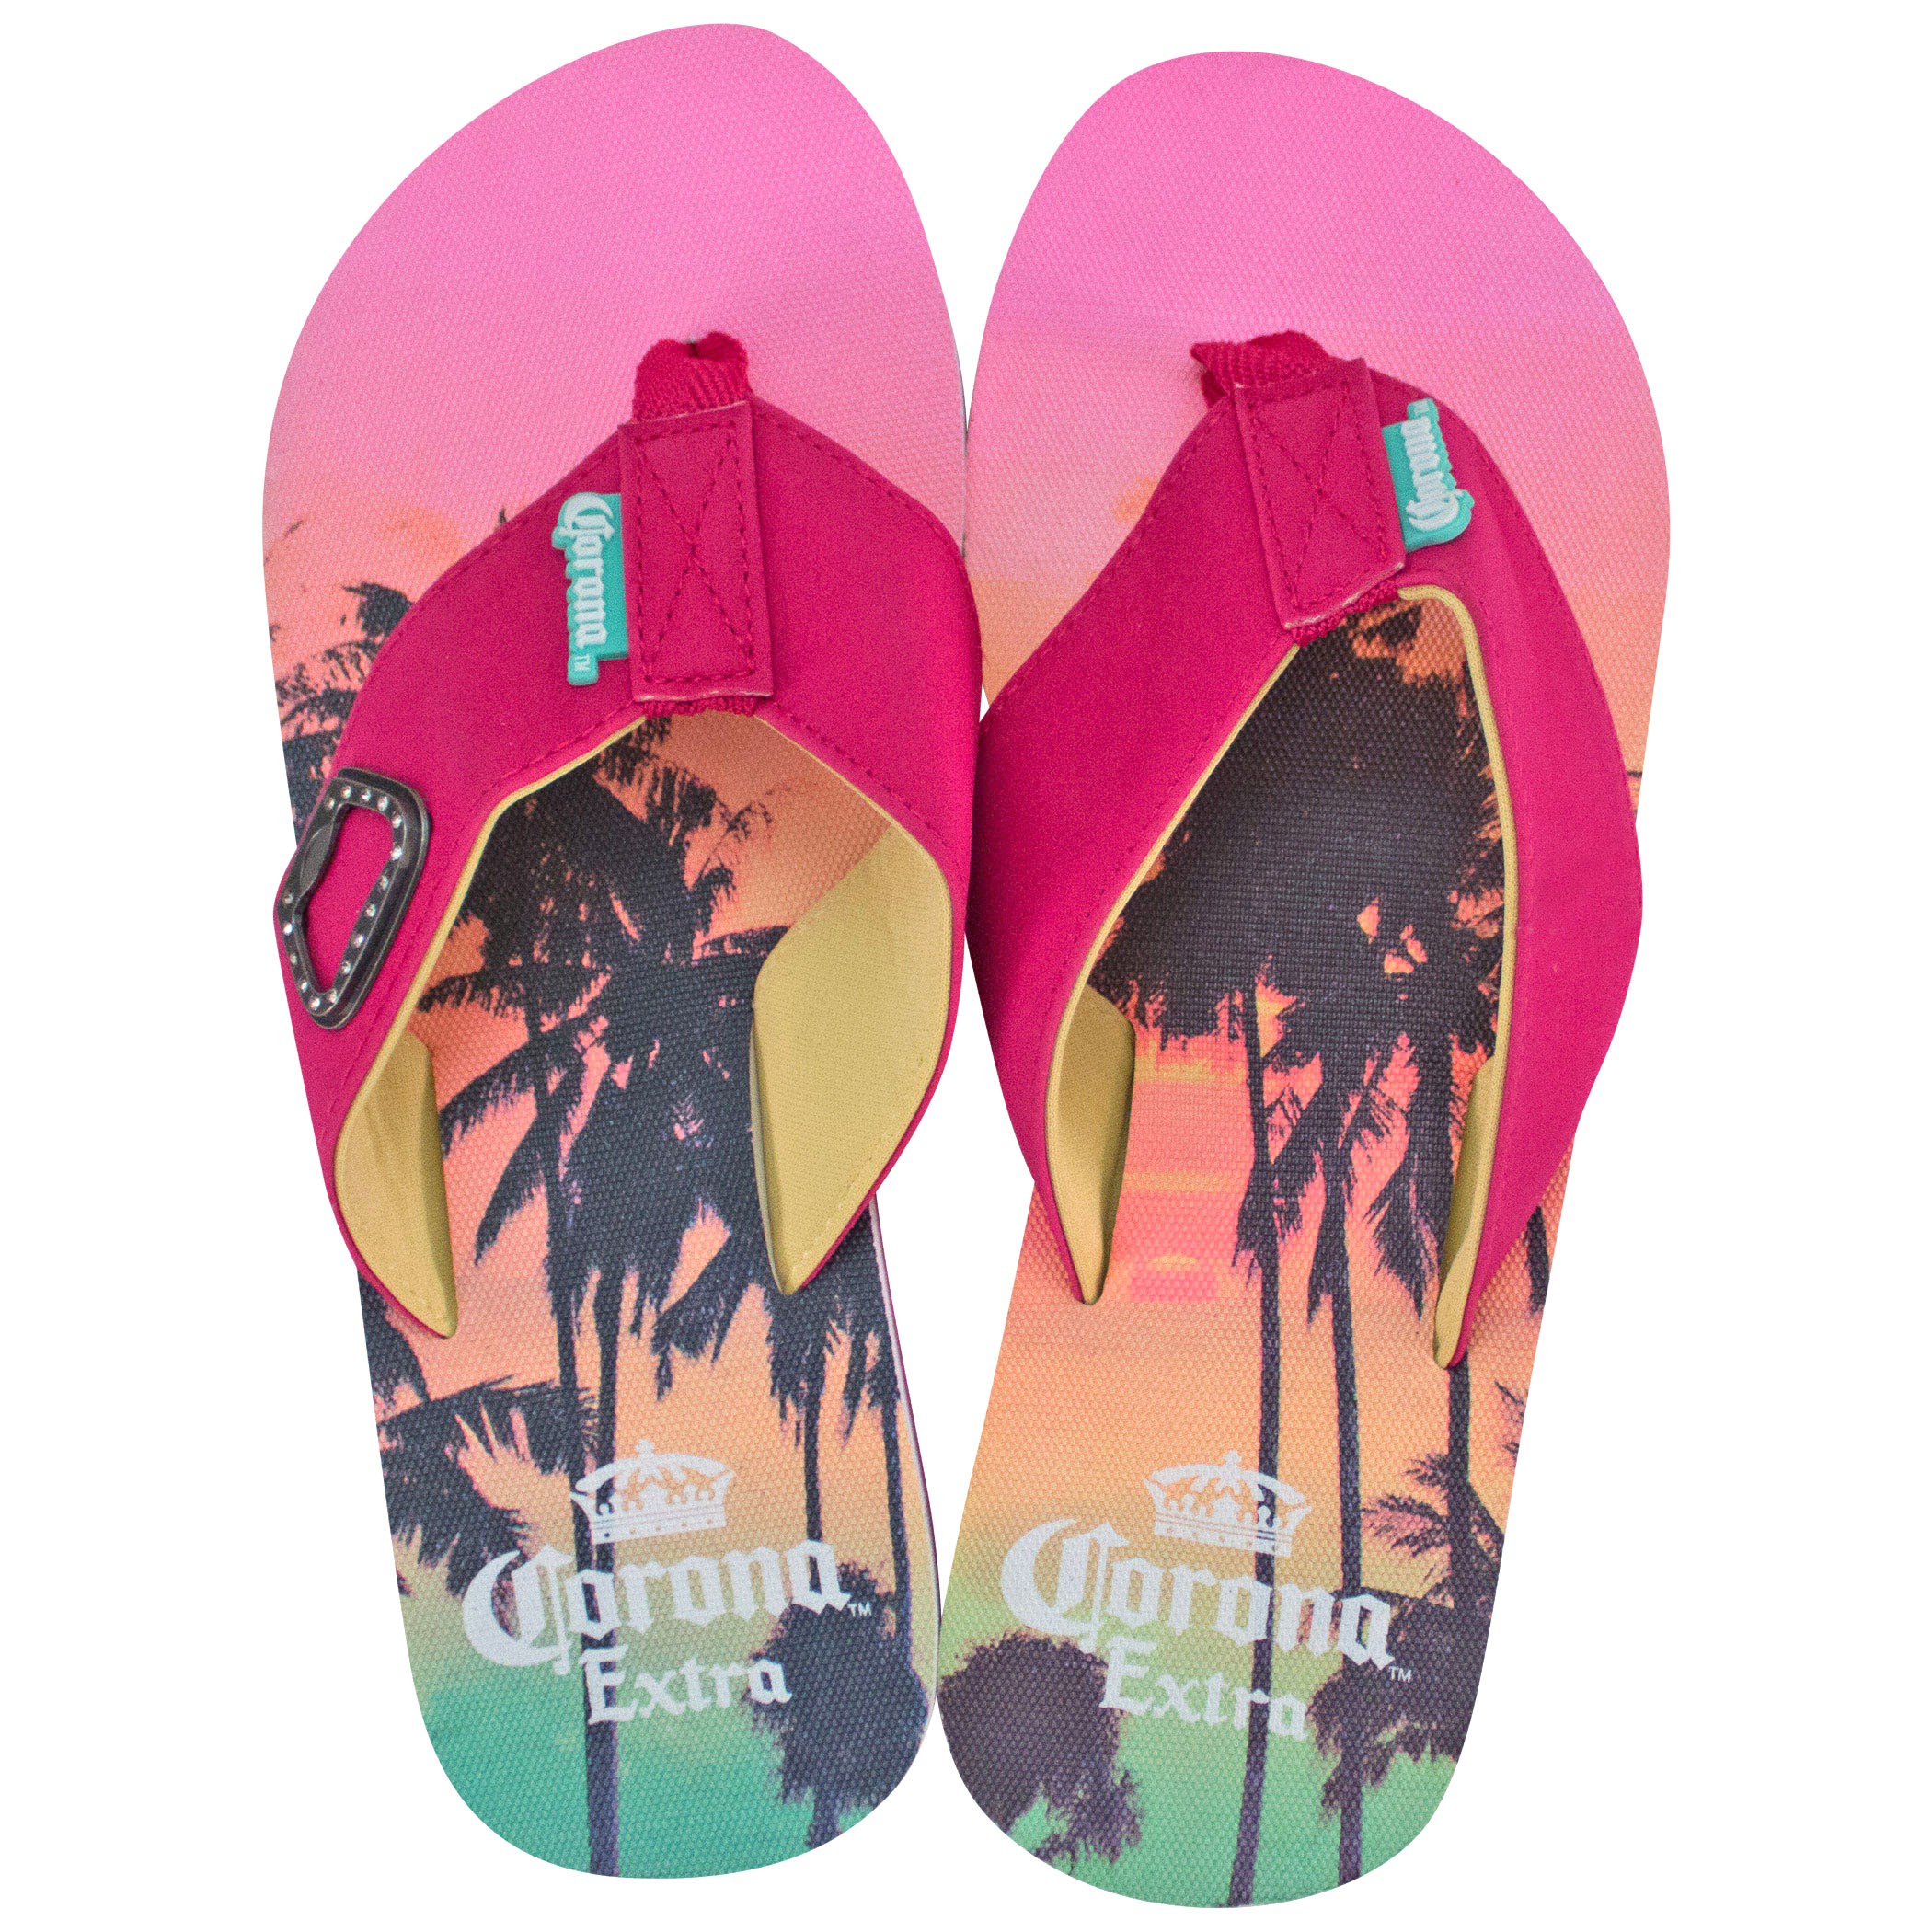 Corona Extra Pink Sunset Women's Sandals